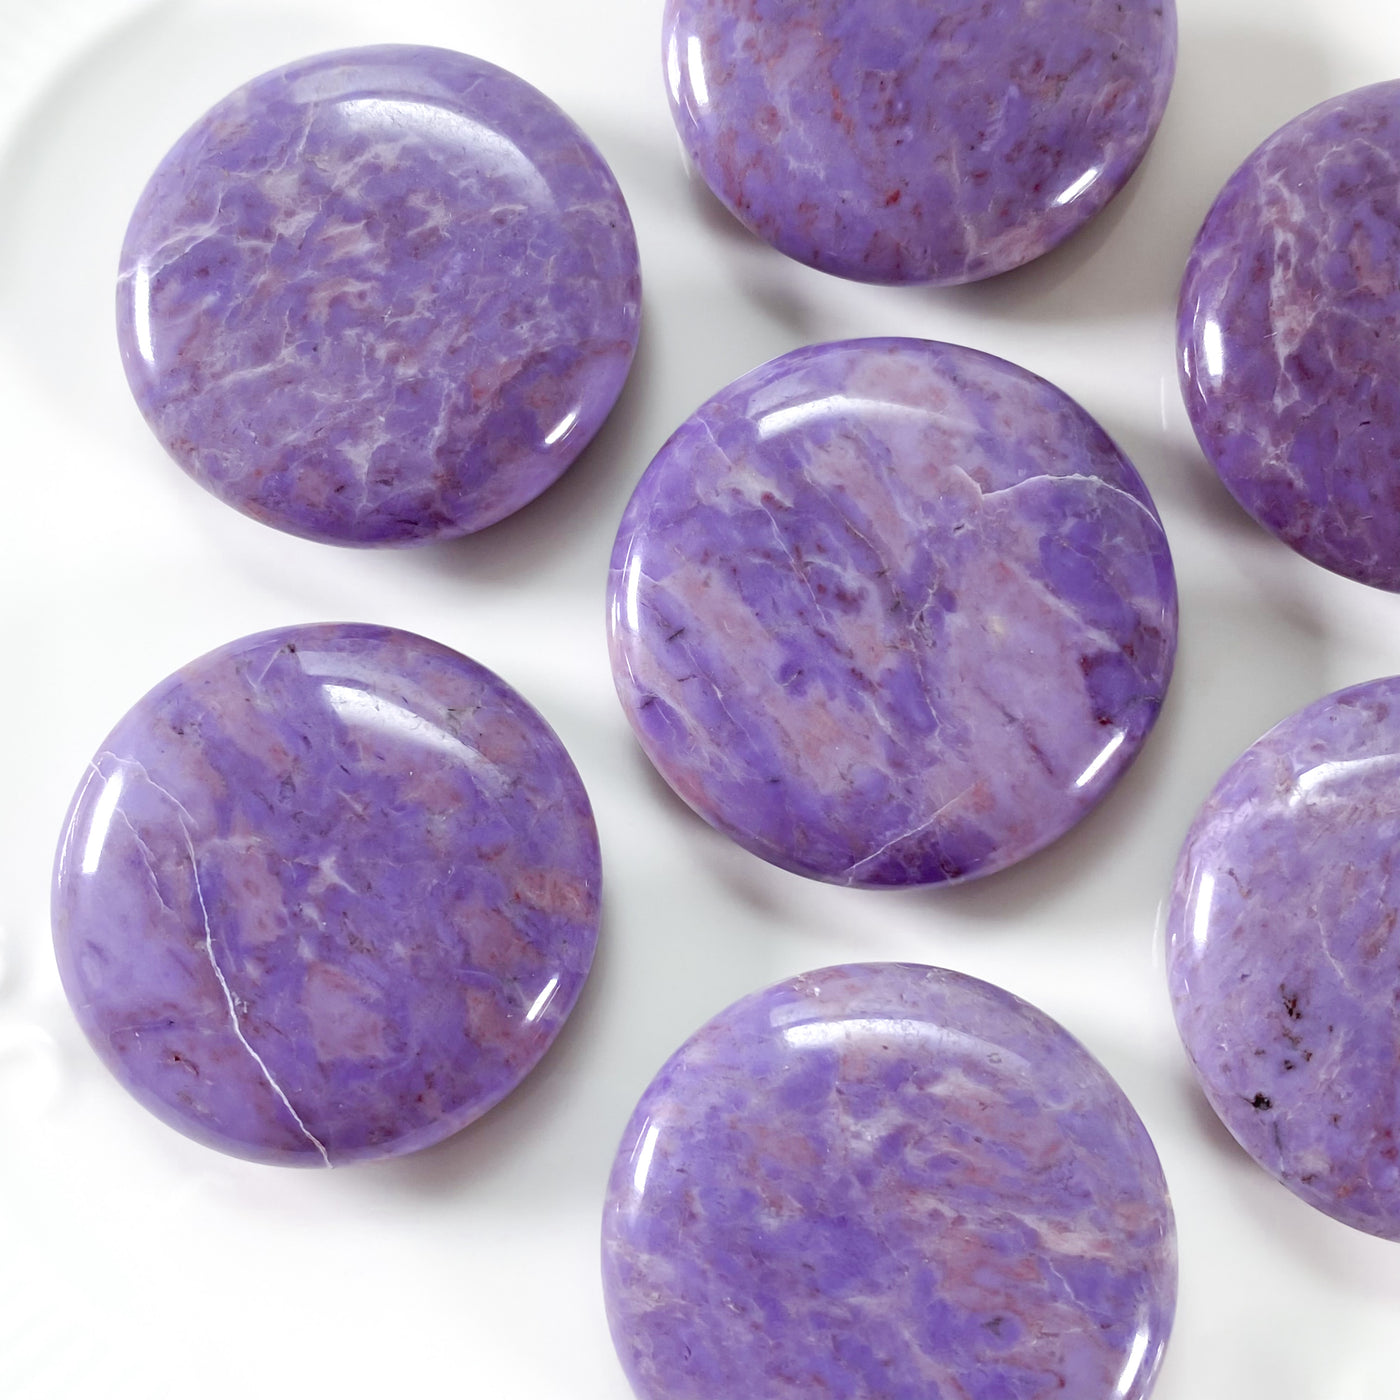 Compassion Expanding Purple Jade Palm Stone